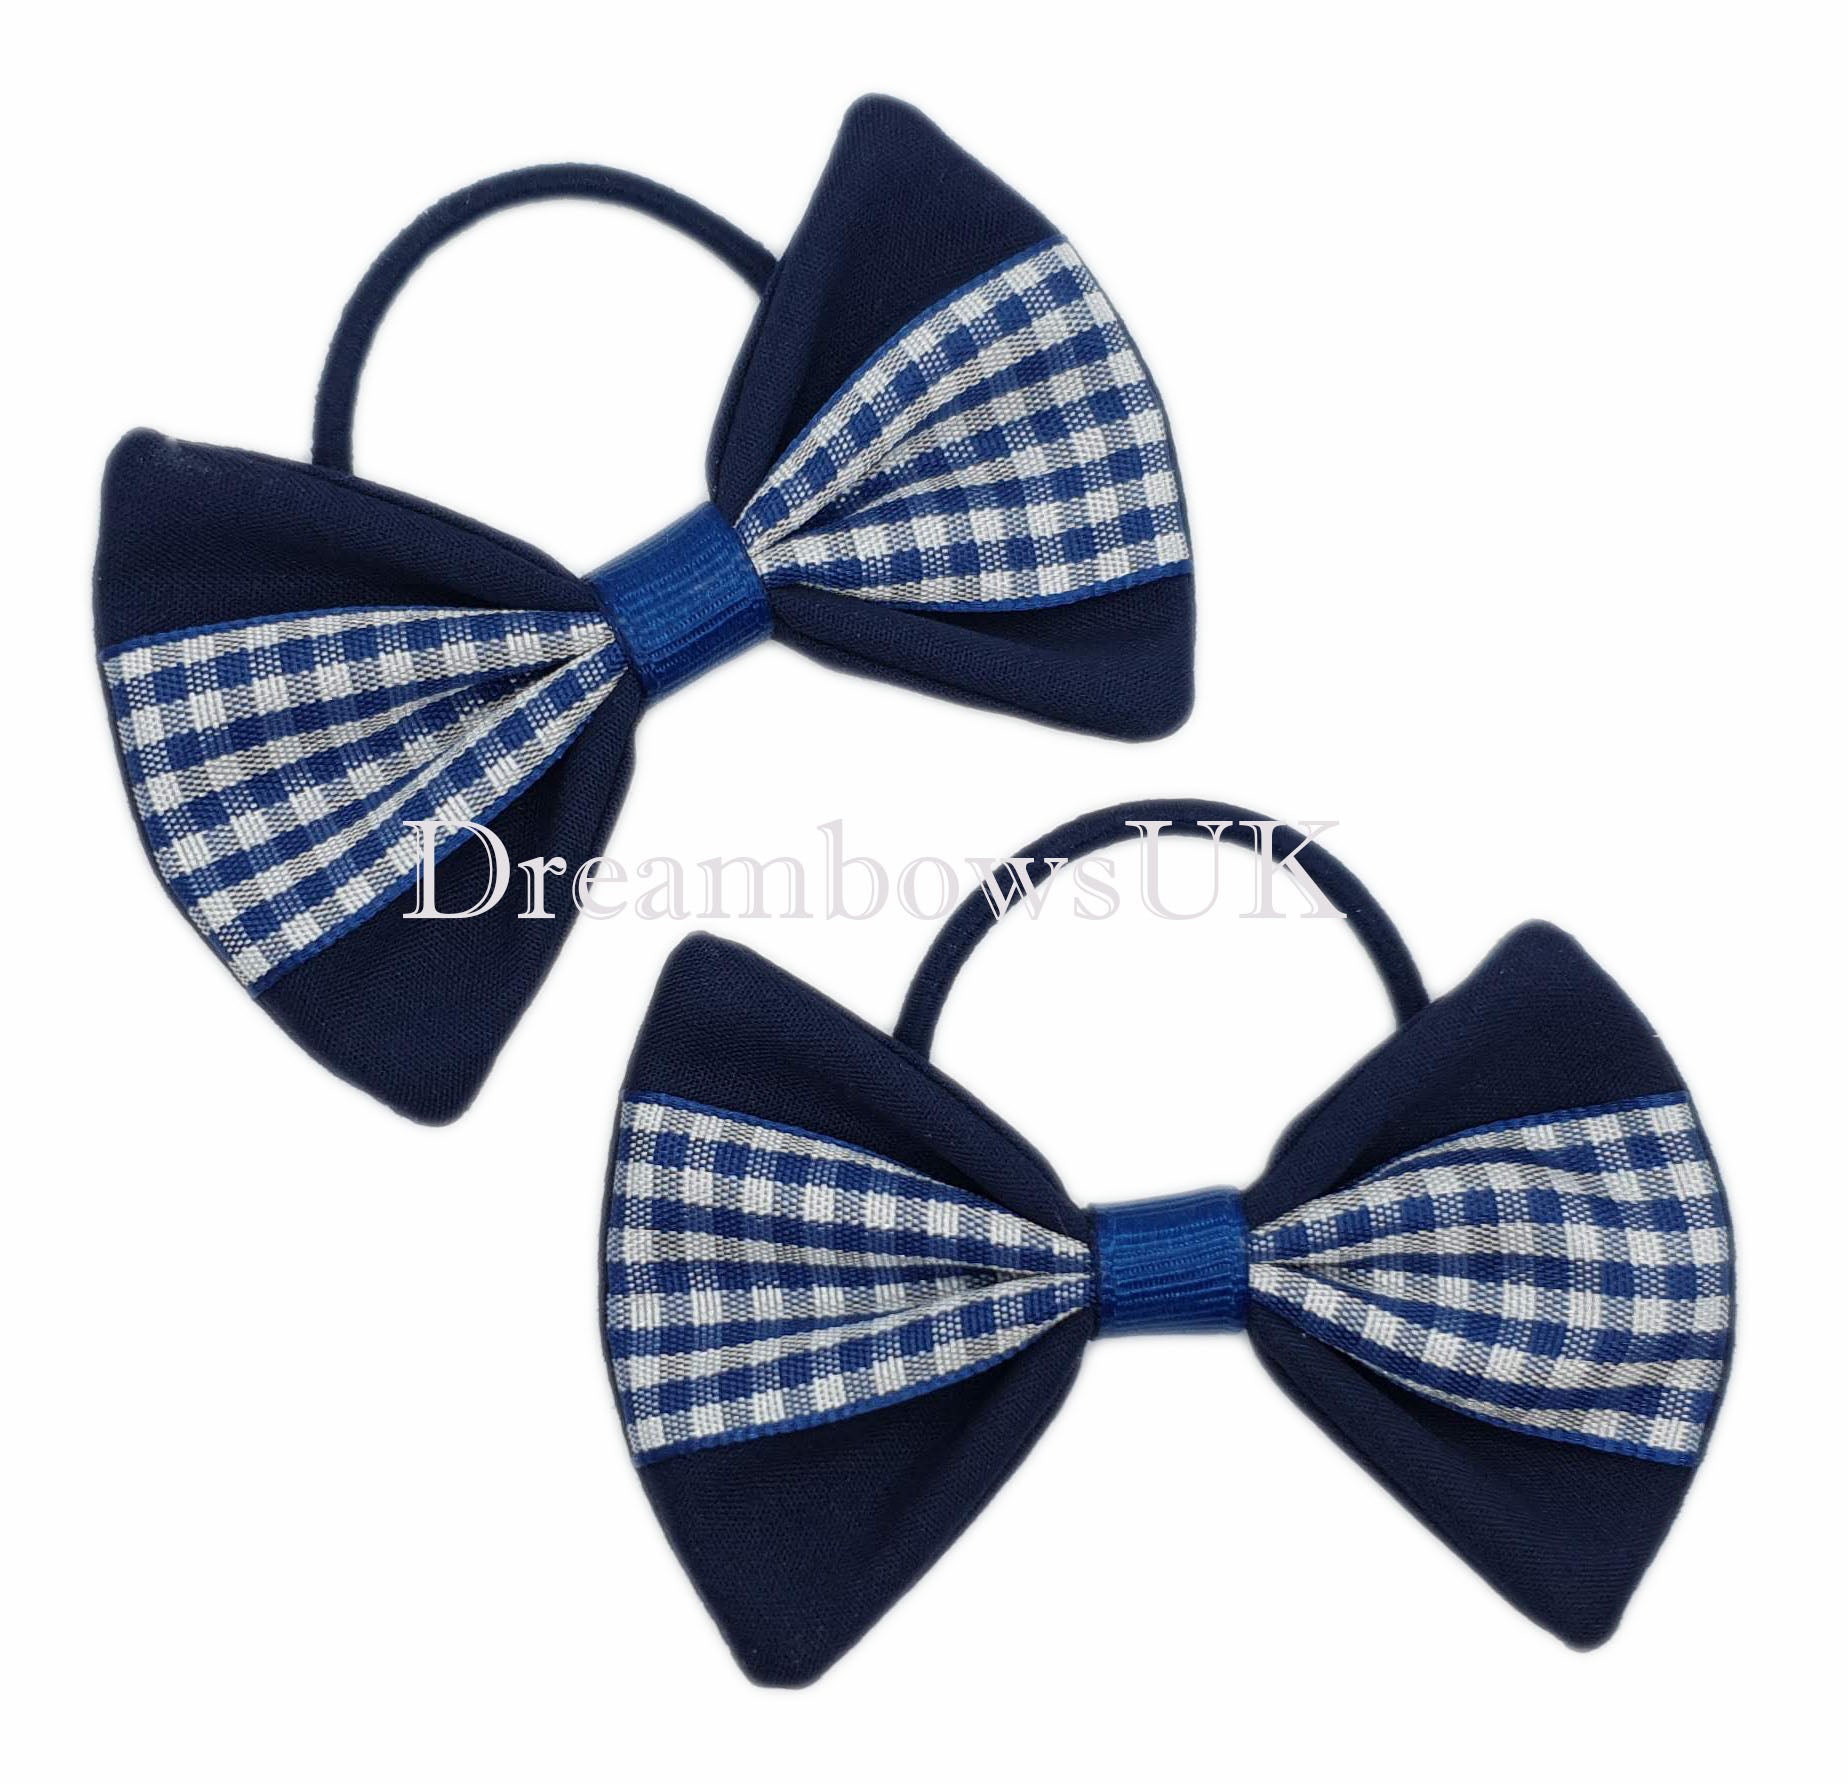 Navy blue gingham hair bows on thin hair ties